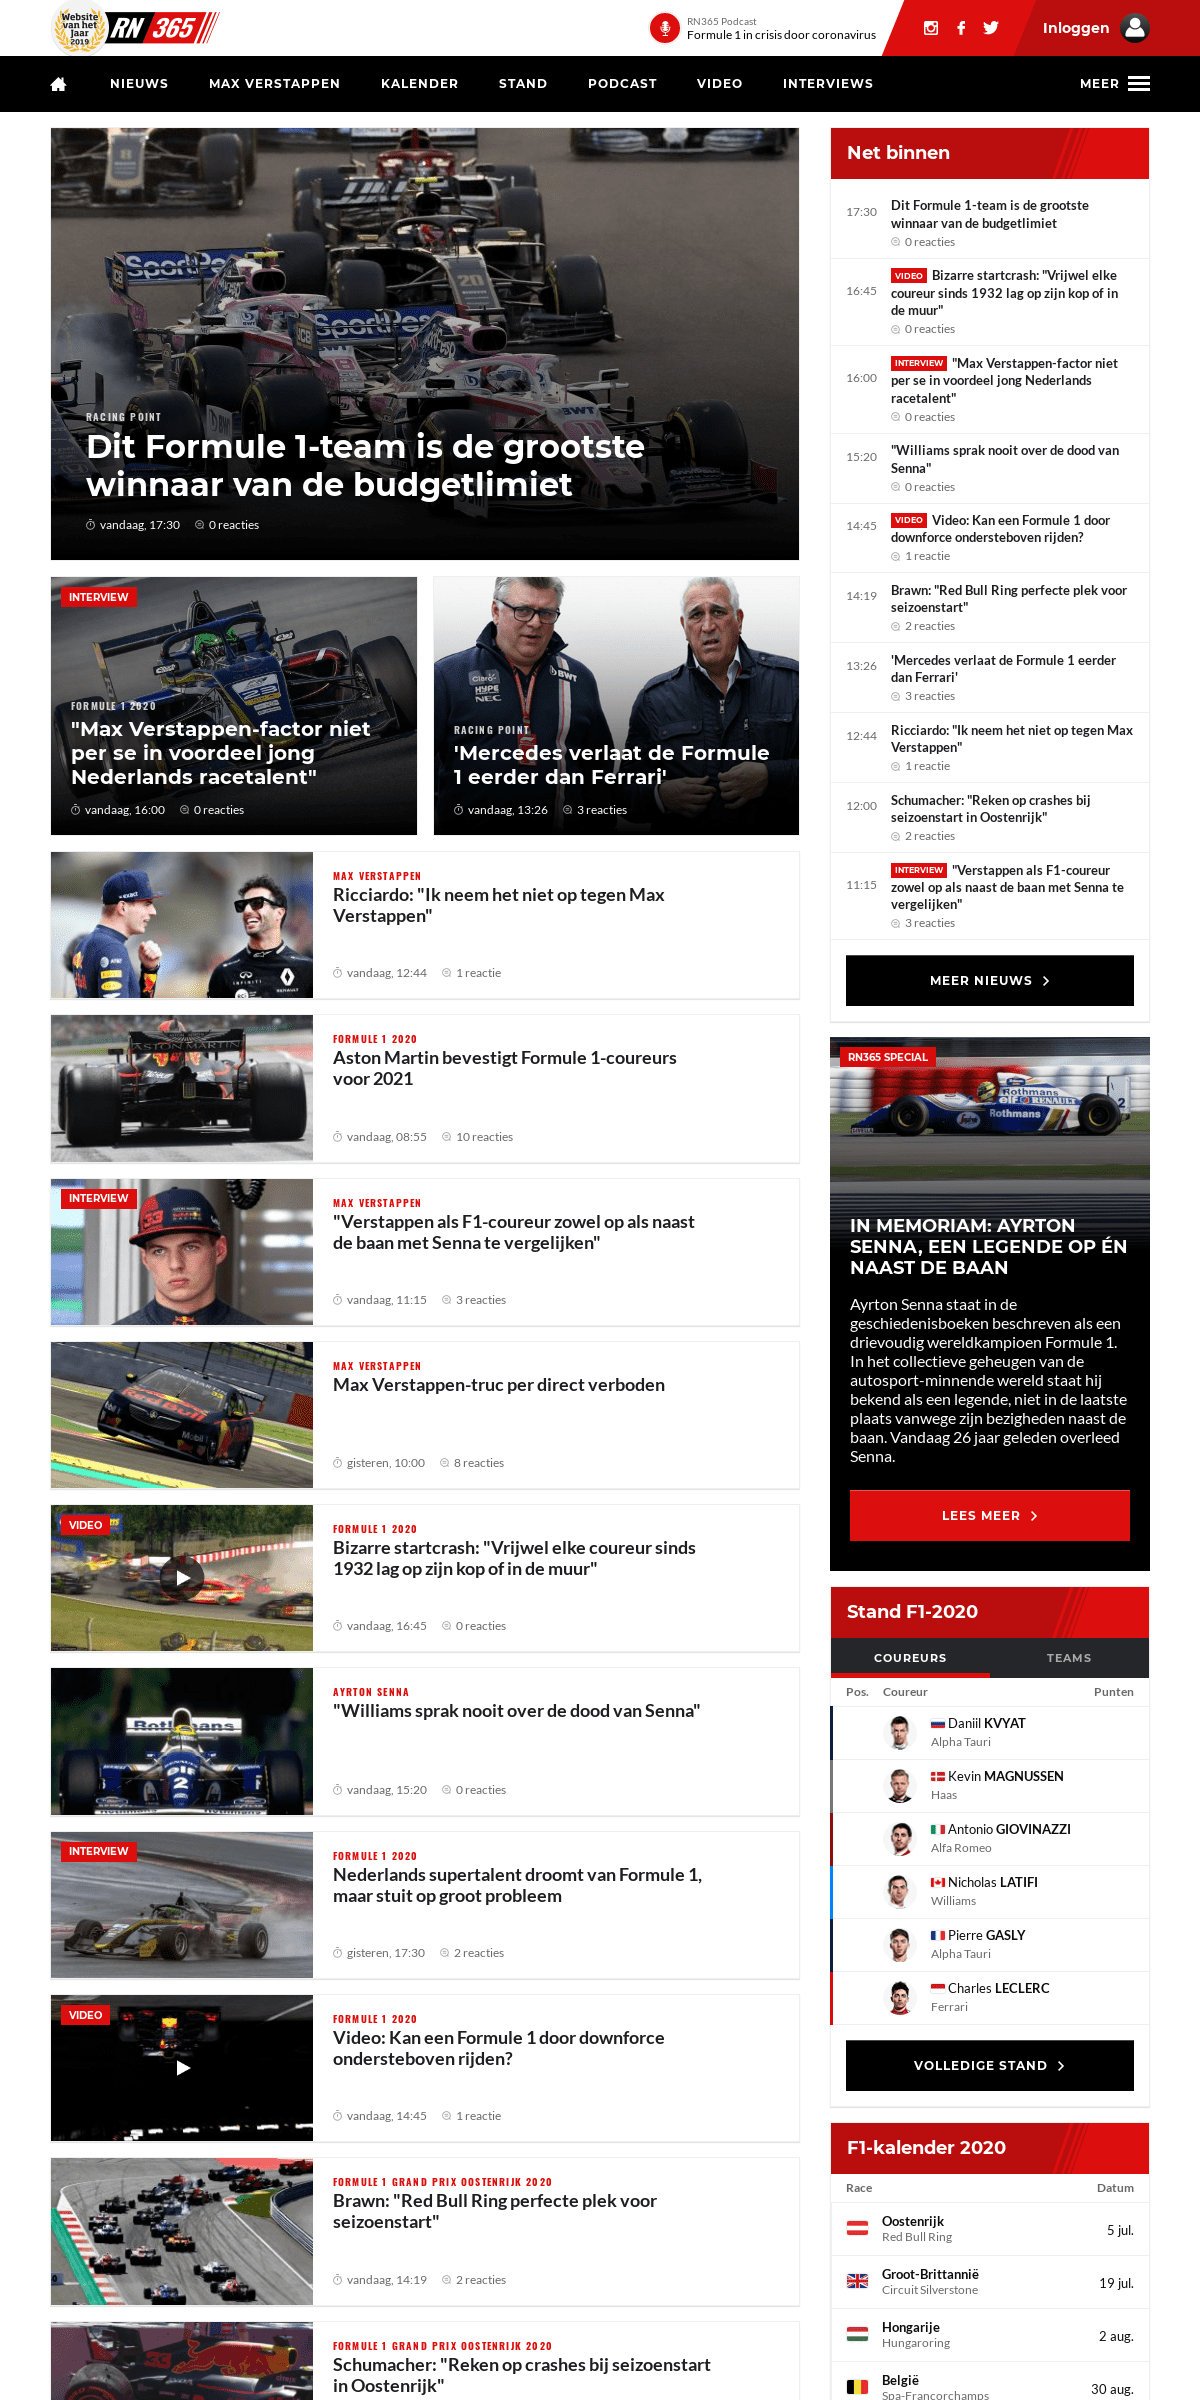 A complete backup of racingnews365.nl